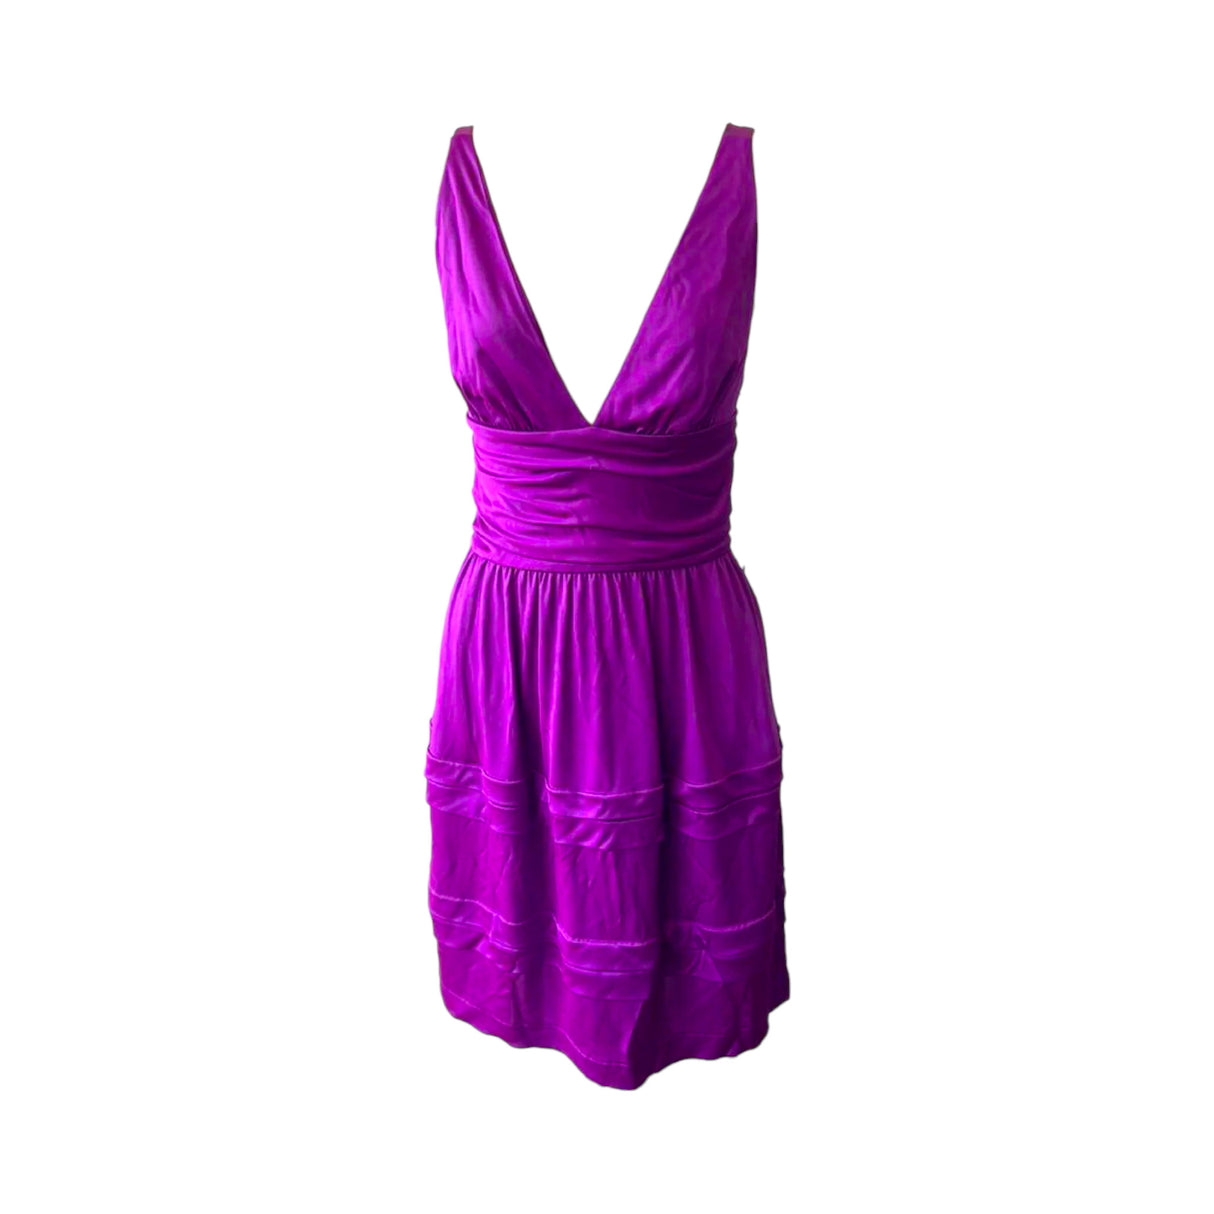 Roberto Cavalli Like-New Short Purple Dress - Size M | Effortless Luxury | A Second Chance Thrift Store